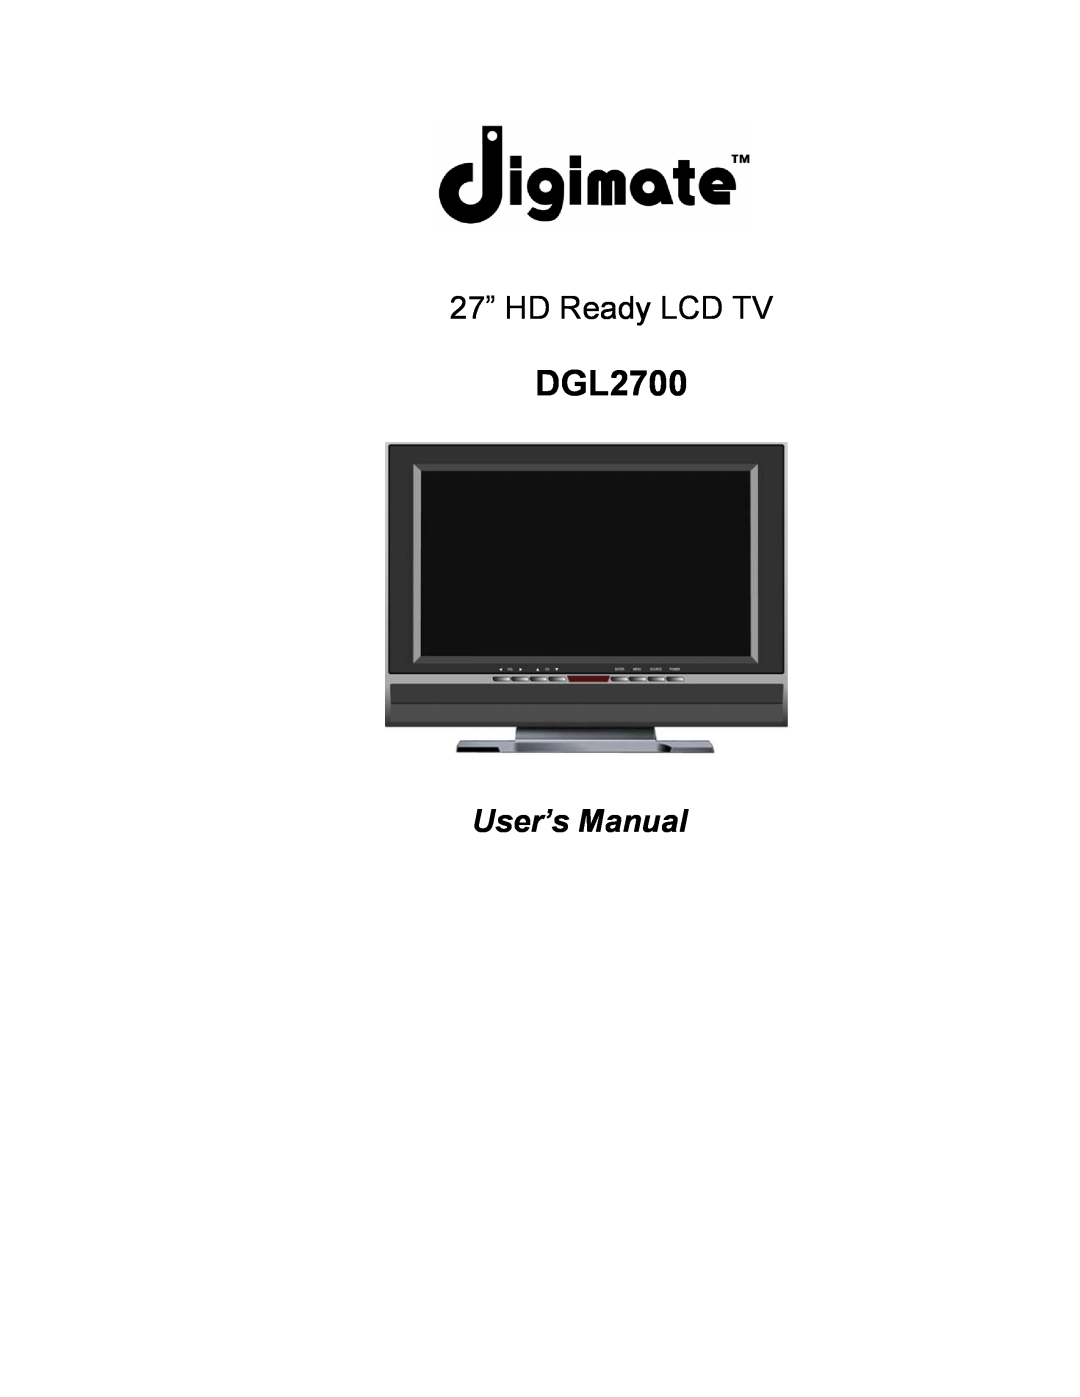 Digimate DGL2700 manual 27” HD Ready LCD TV, User’s Manual 